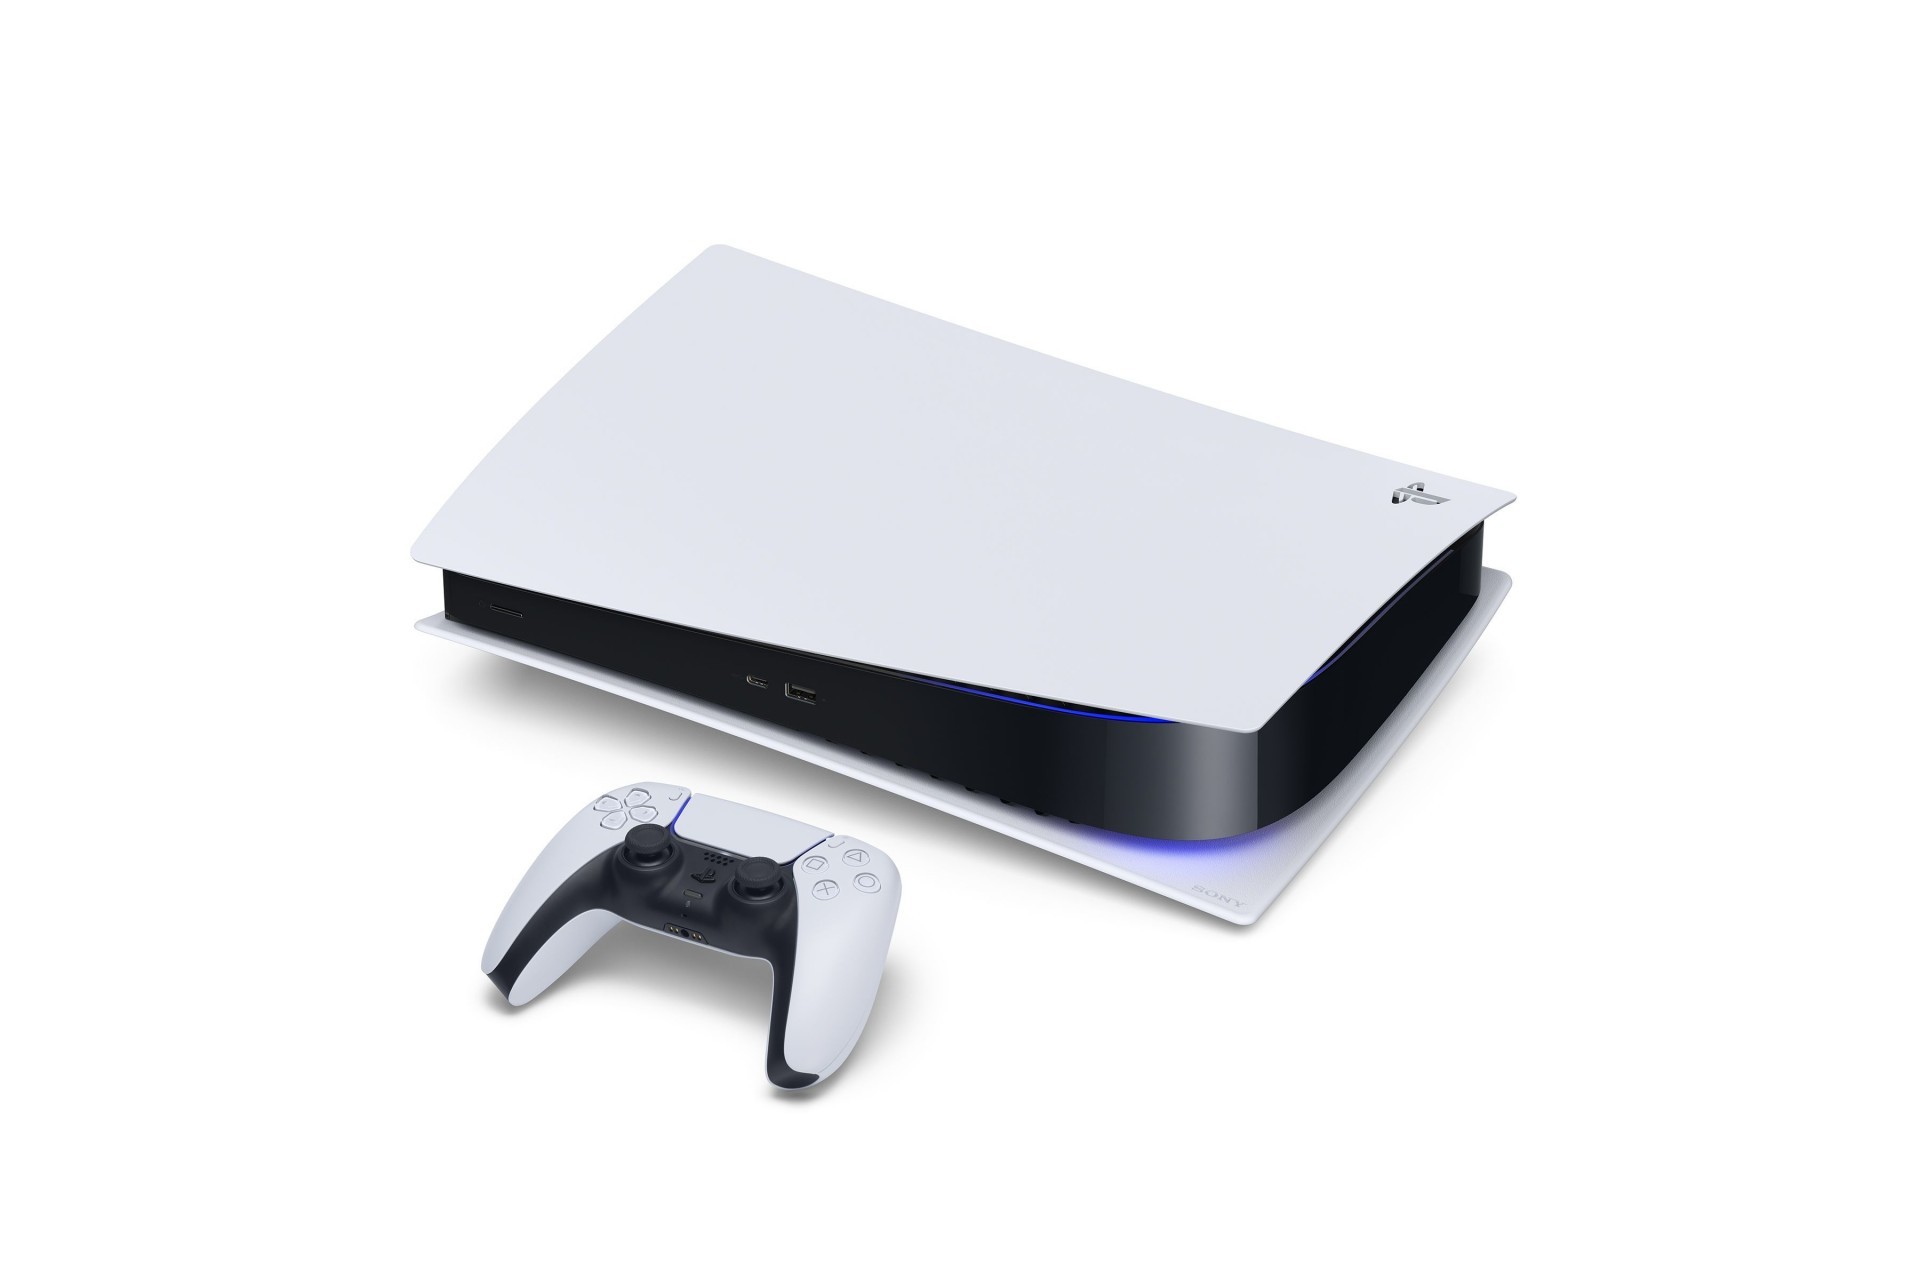 PlayStation 5 主機售價正式公布 預定 11 月 12 日起全球陸續上市